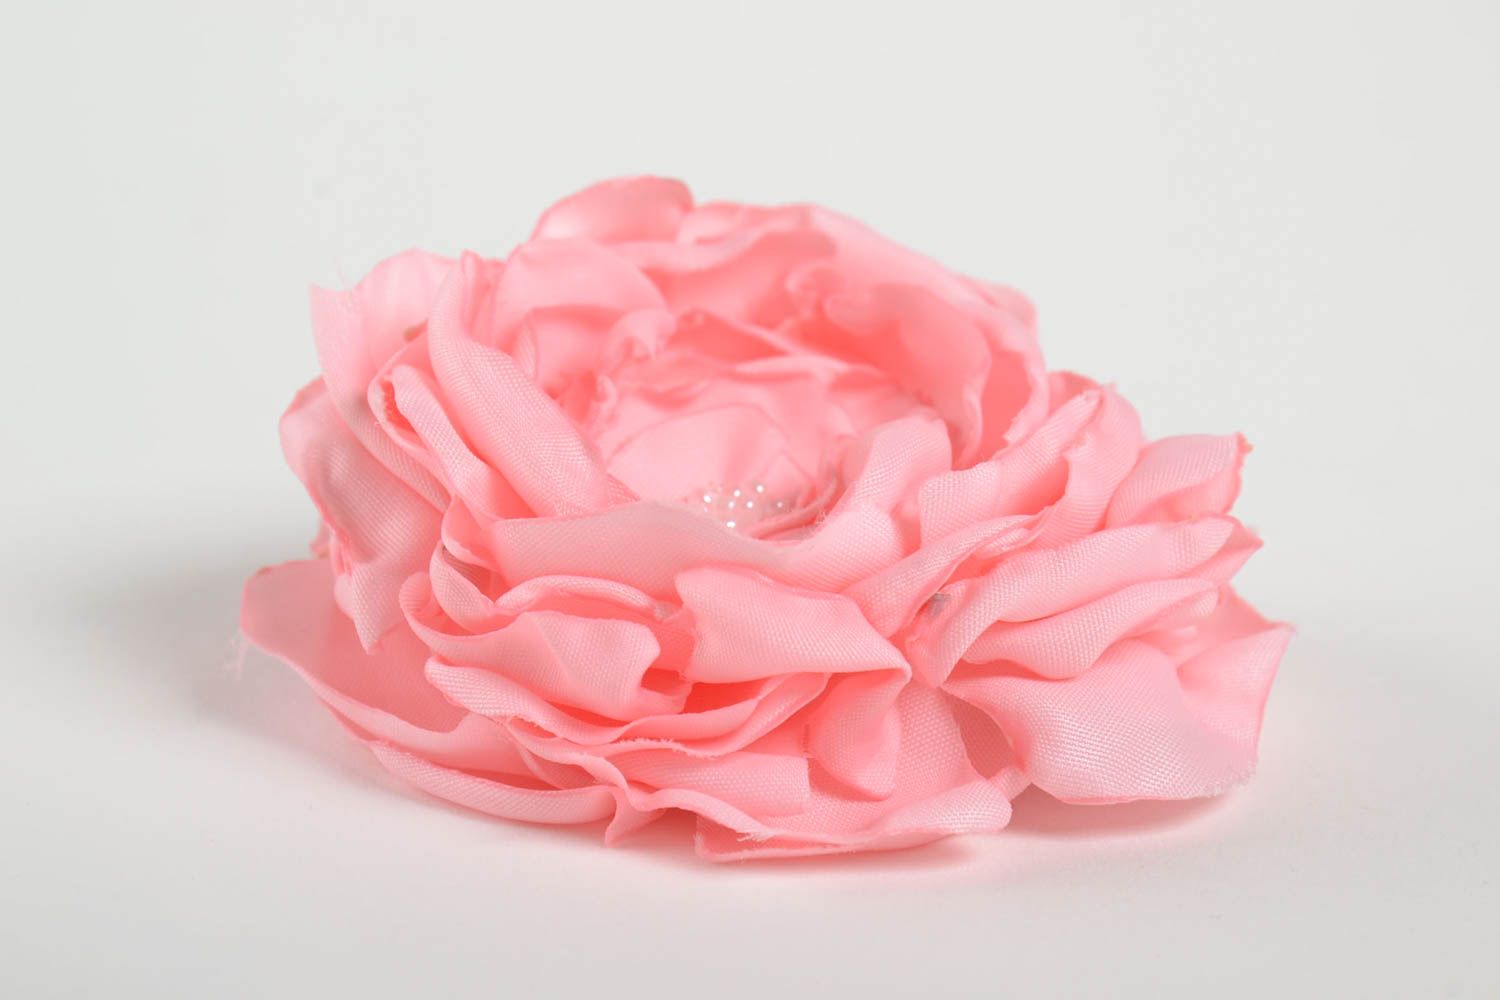 Заколка цветок из ткани розовая нежная пышная ручной работы красивая хэнд мейд фото 2